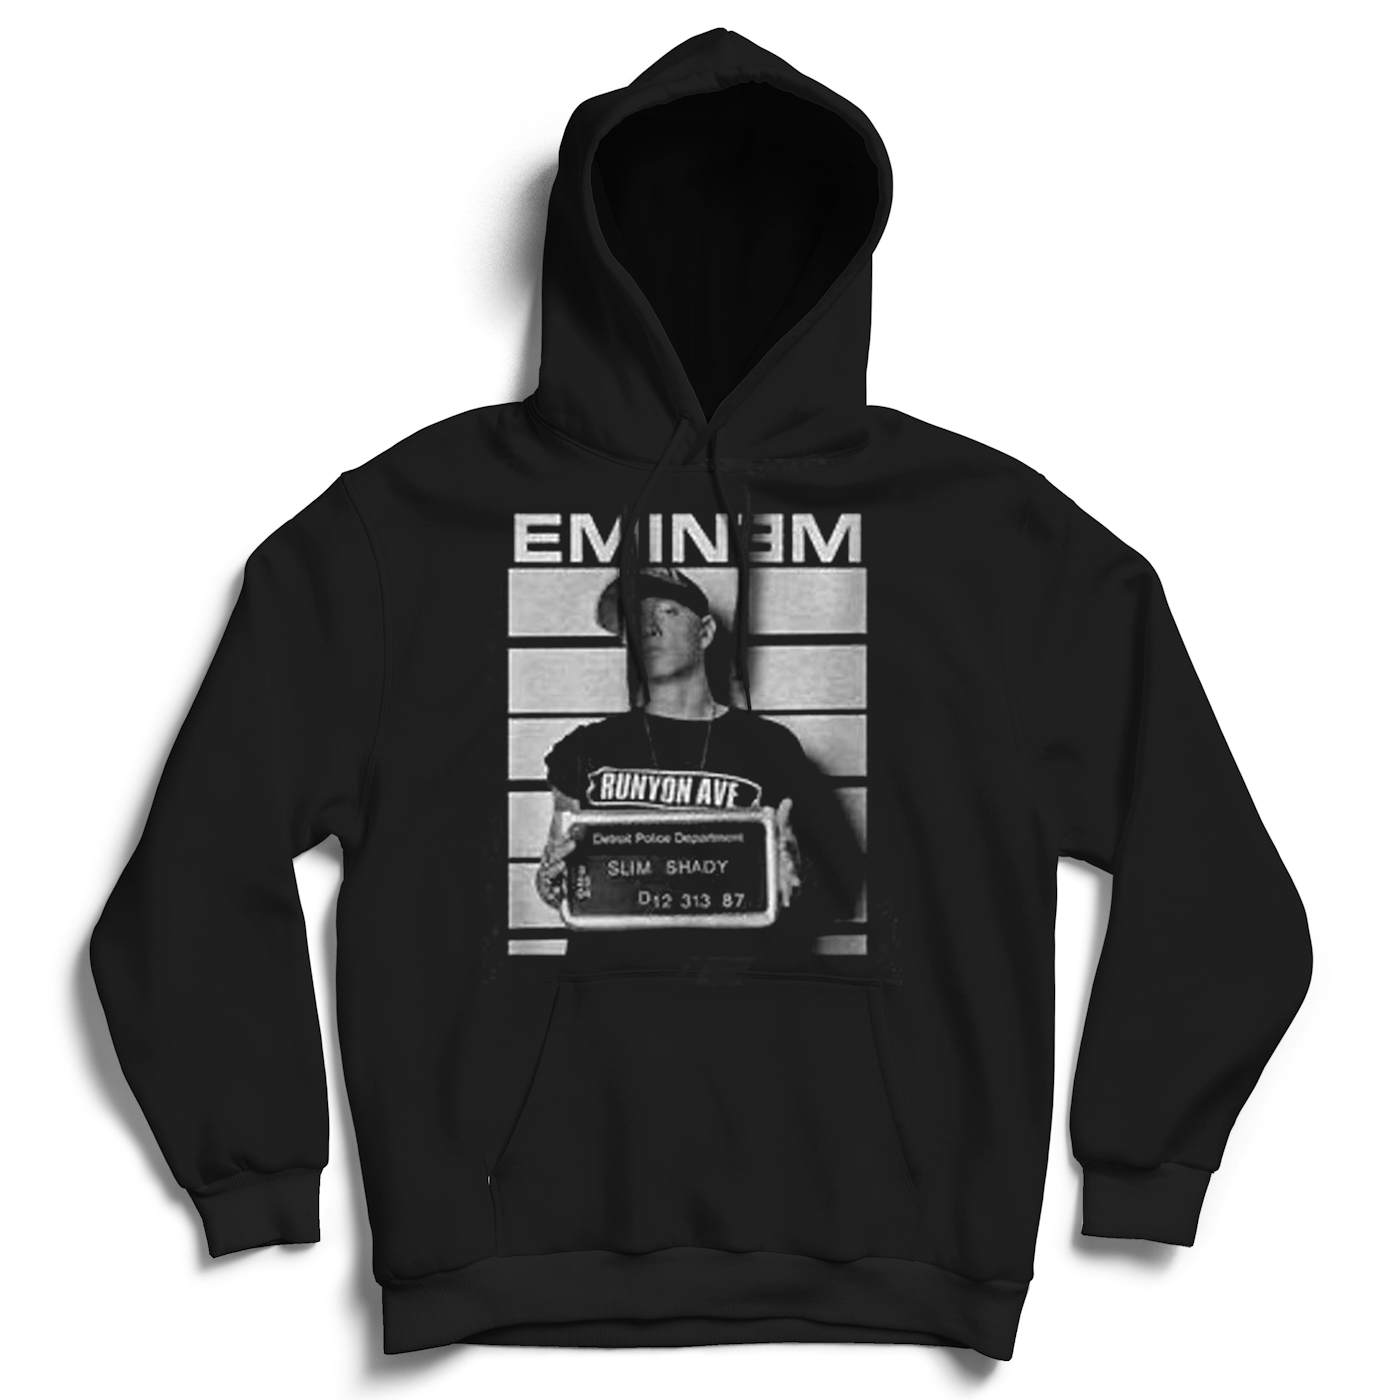 Eminem Hoodie Size Medium